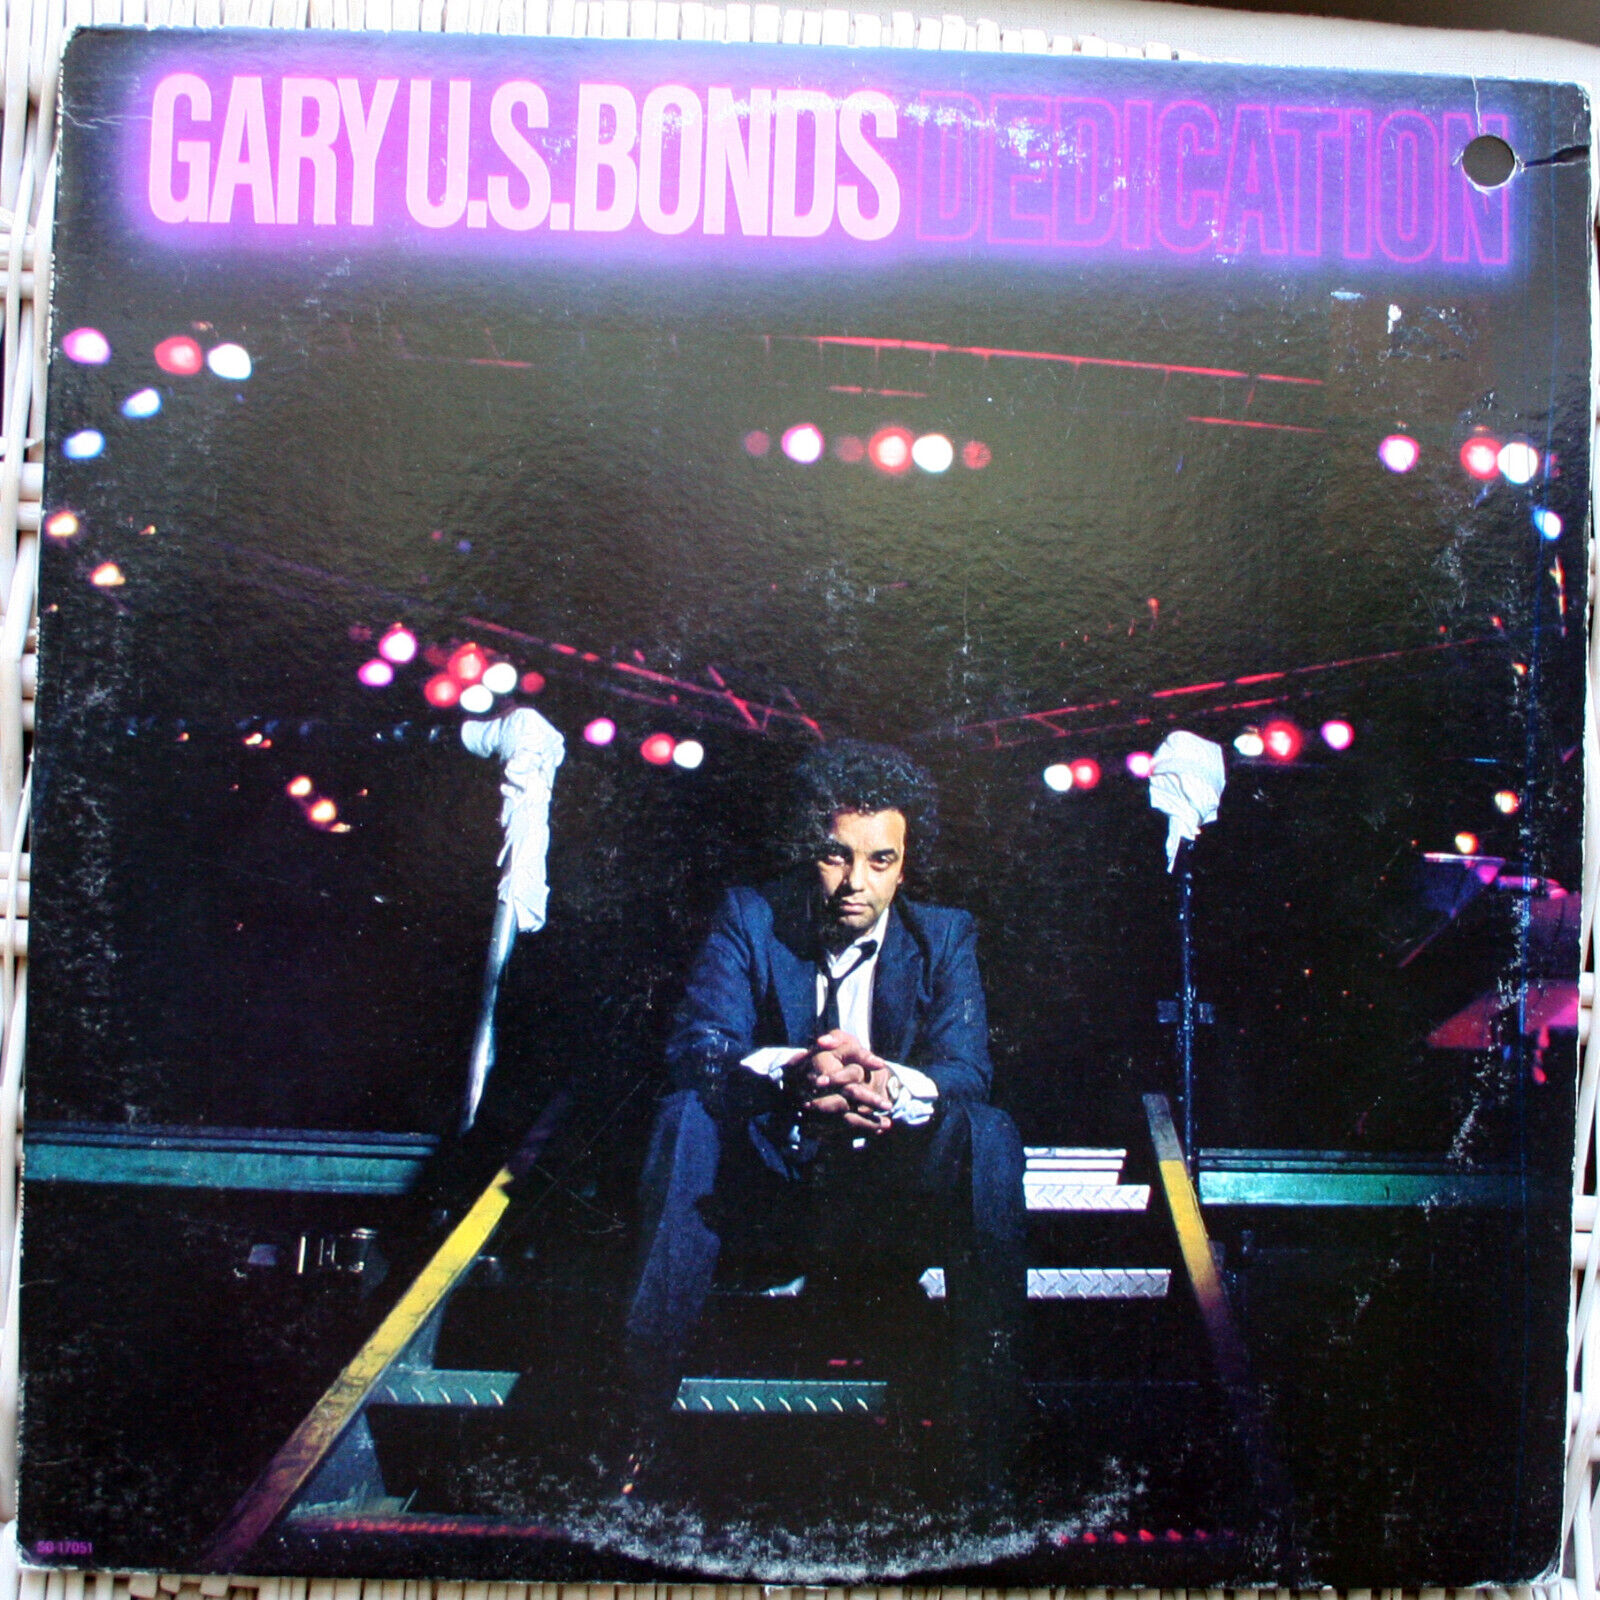 Gary US Bonds Dedication Vinyl LP Record Album EMI 1981 Bruce Springsteen 33RPM